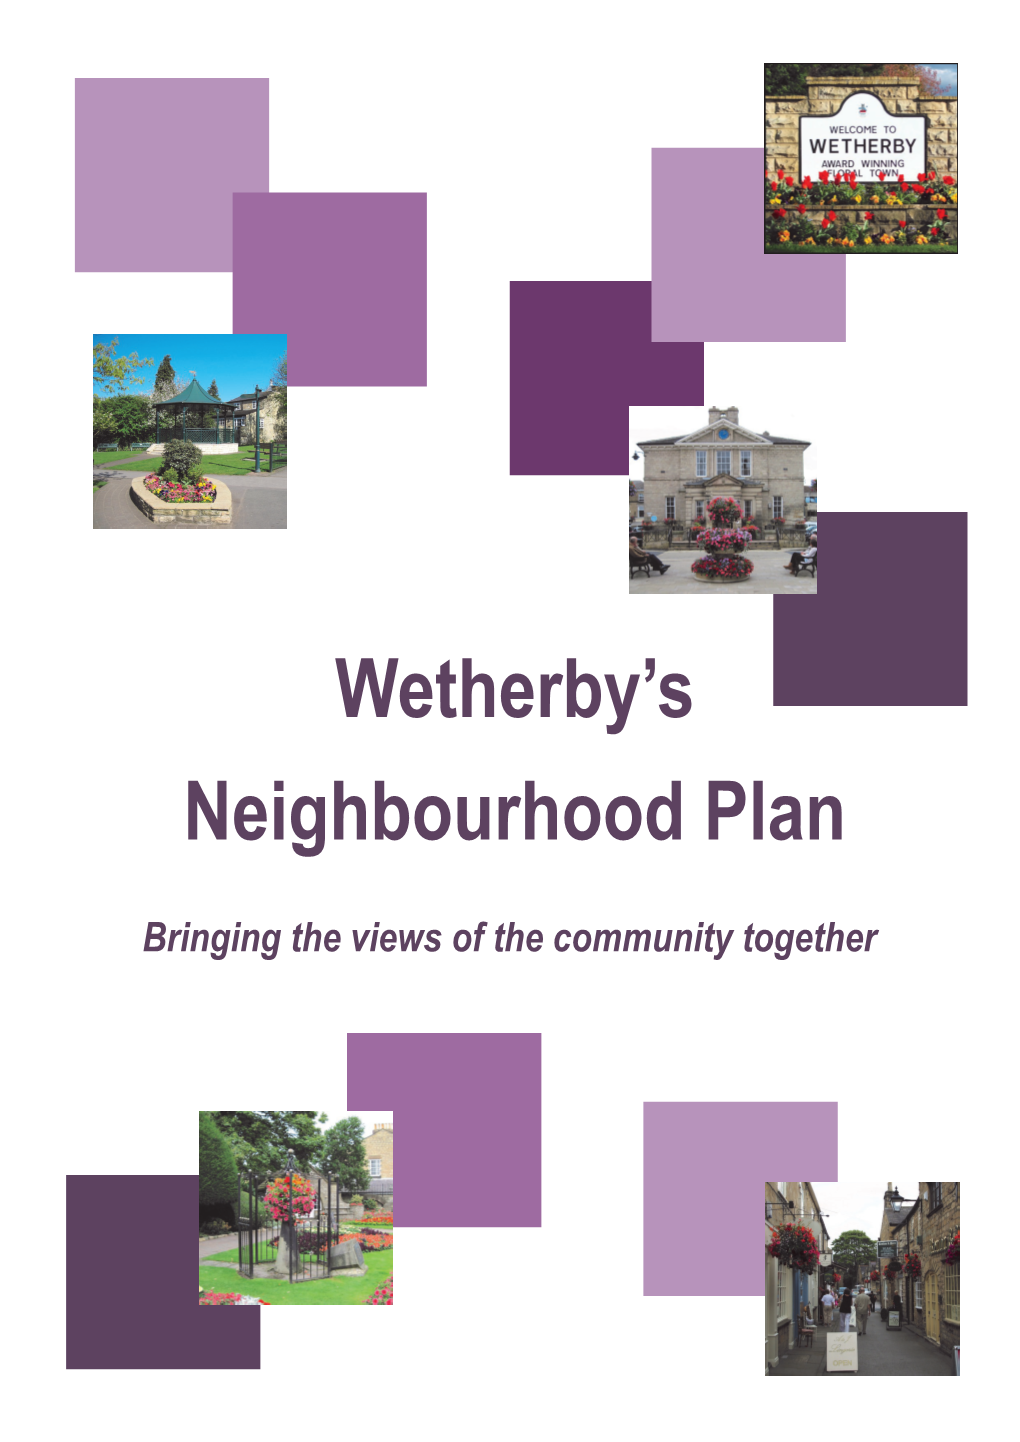 Wetherby's Neighbourhood Plan